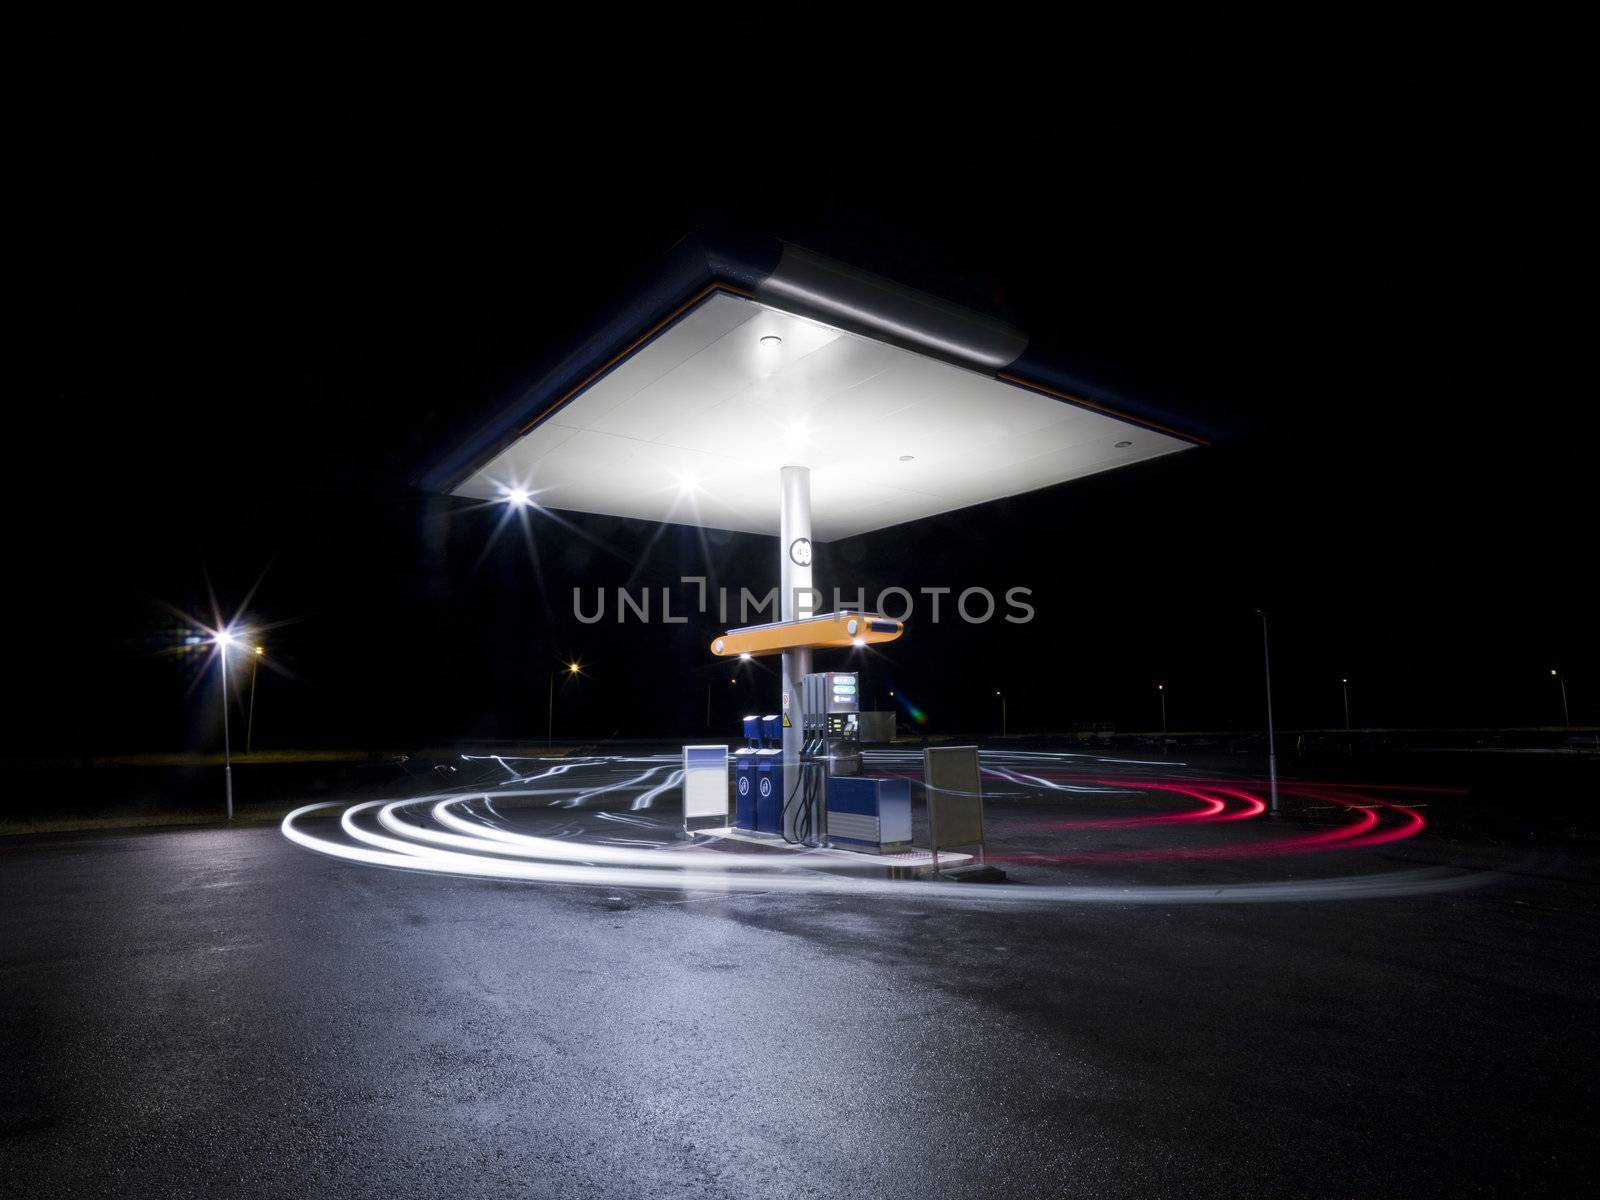 Petrol station at night by gemenacom